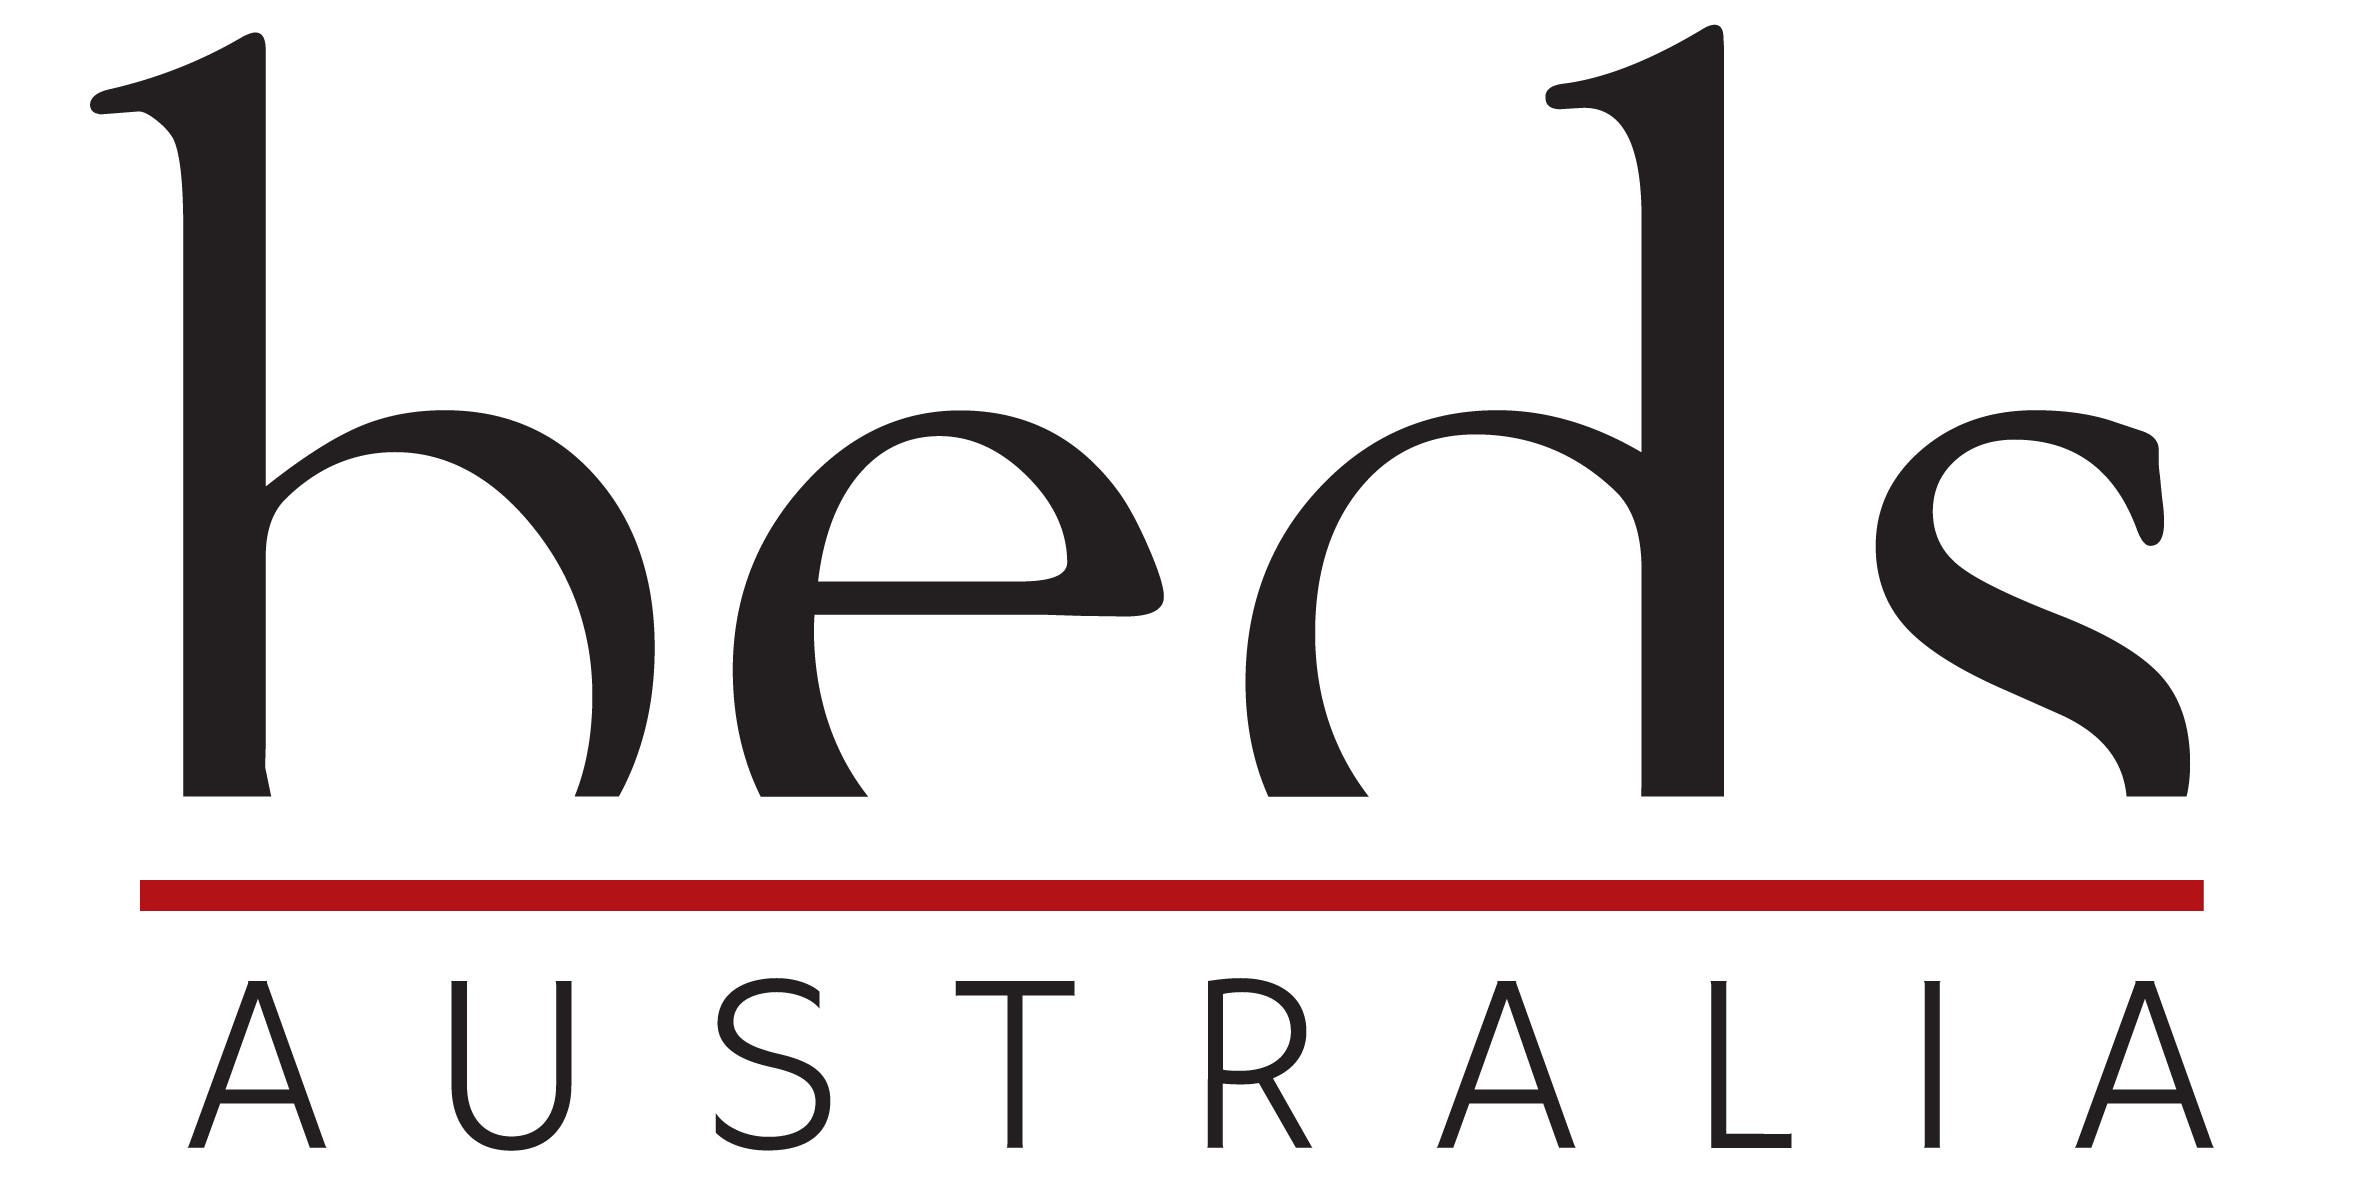 Beds Australia Logo